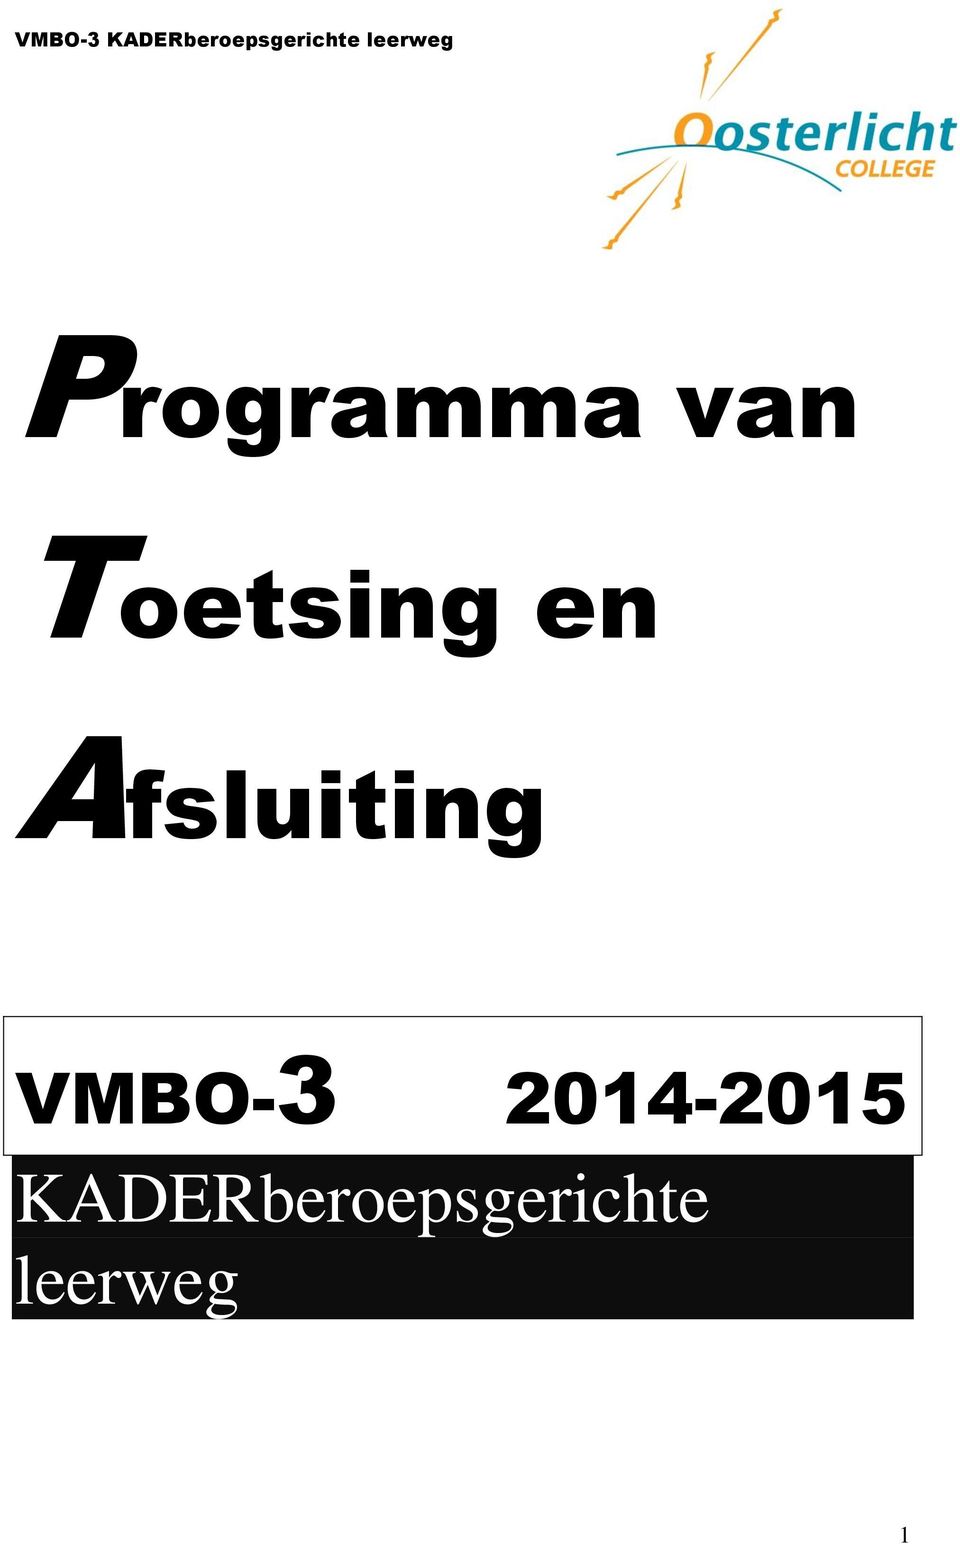 VMBO-3 2014-2015